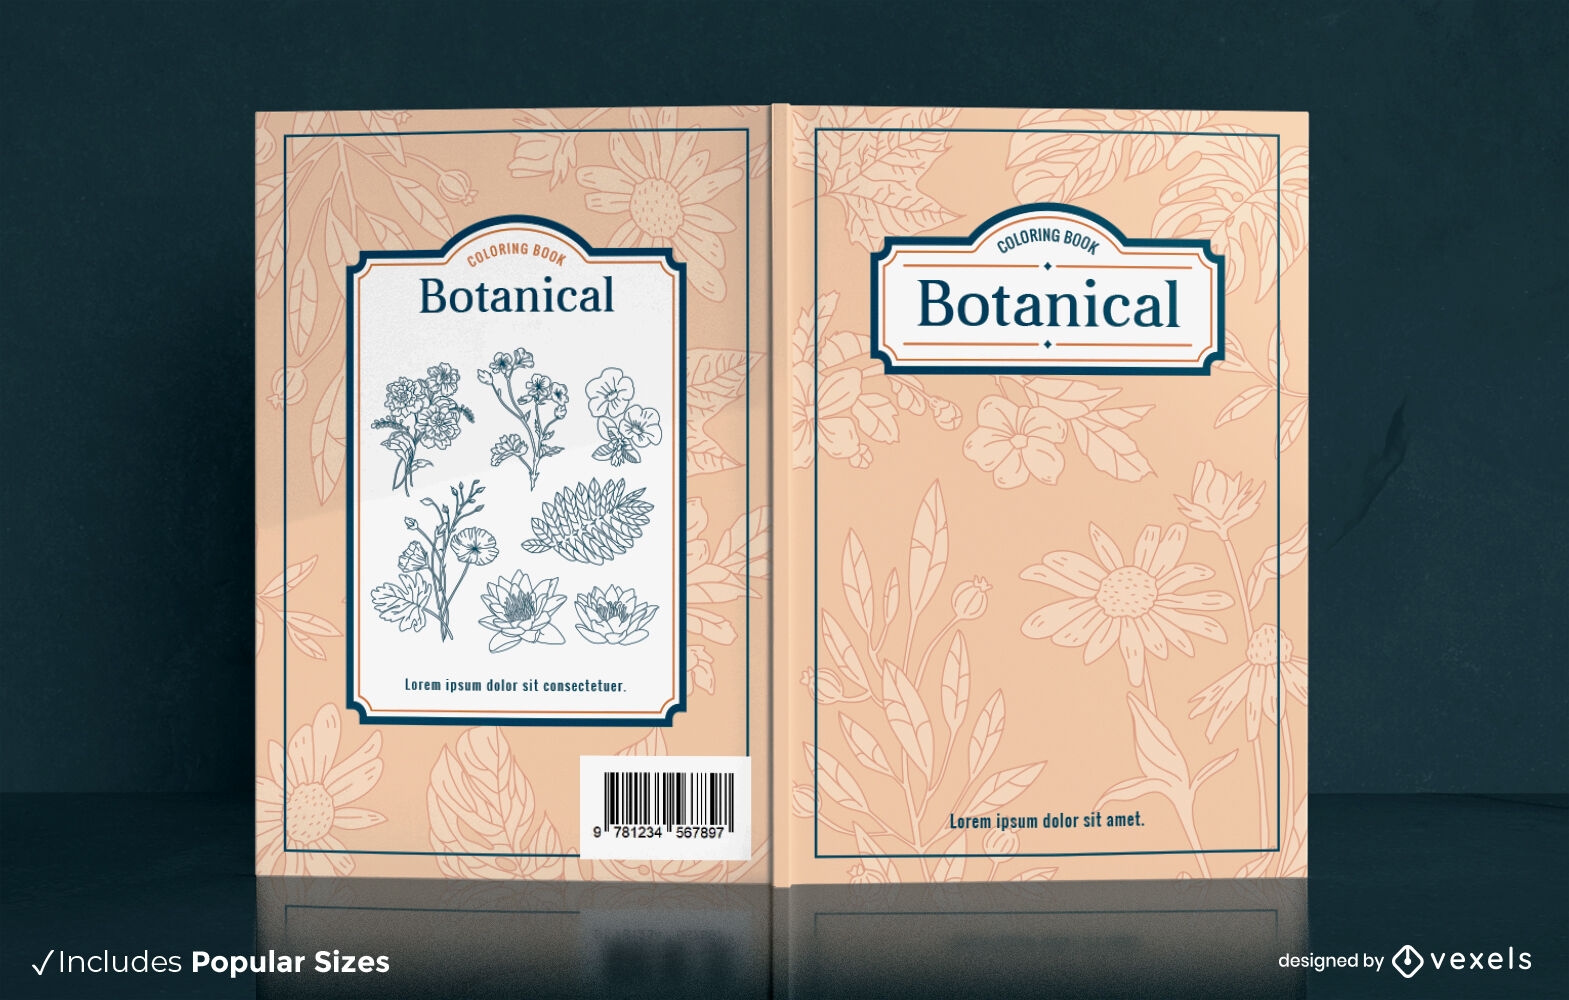 Botanical flowers book cover design